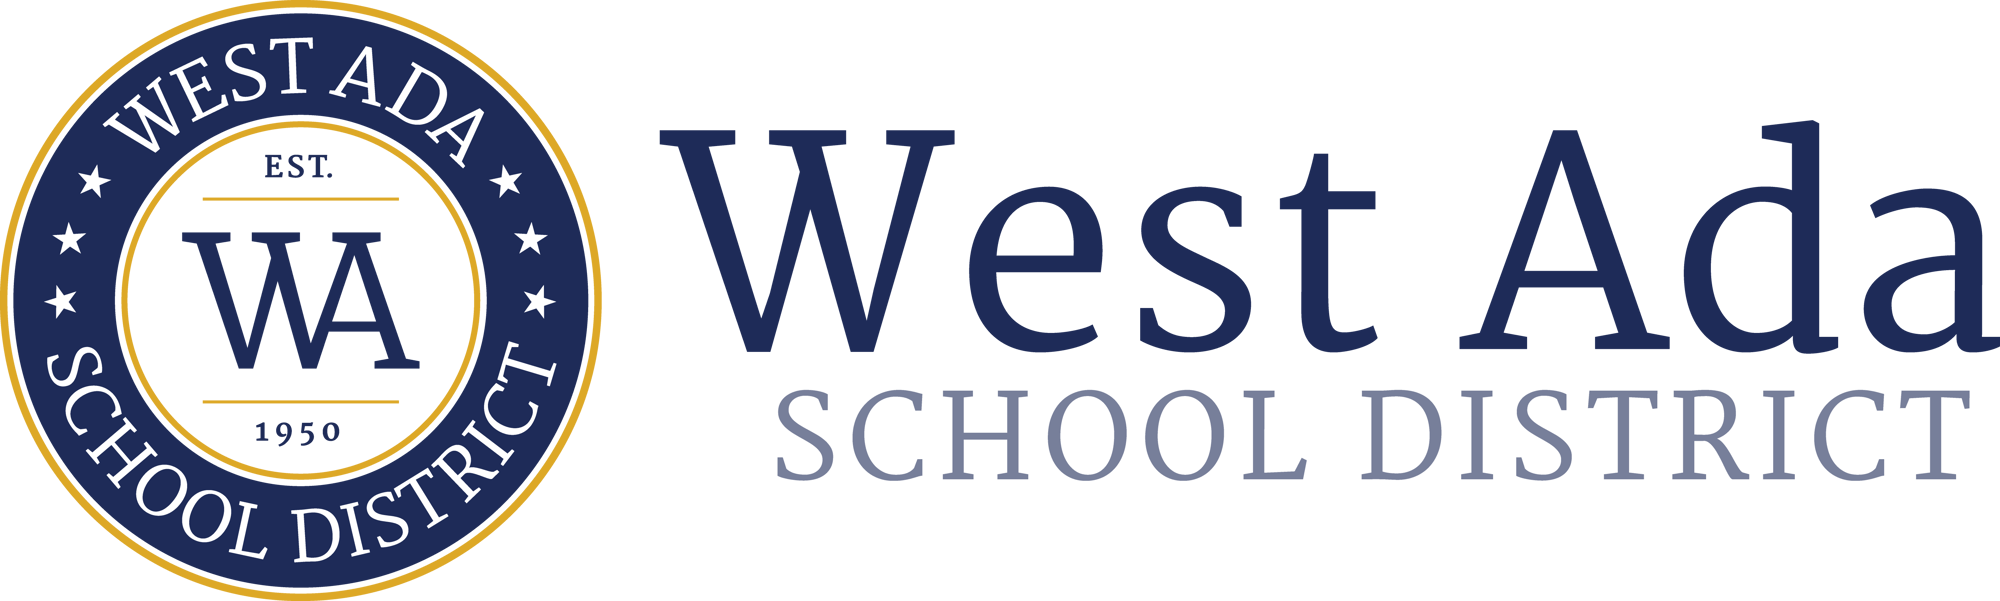 west ada logo